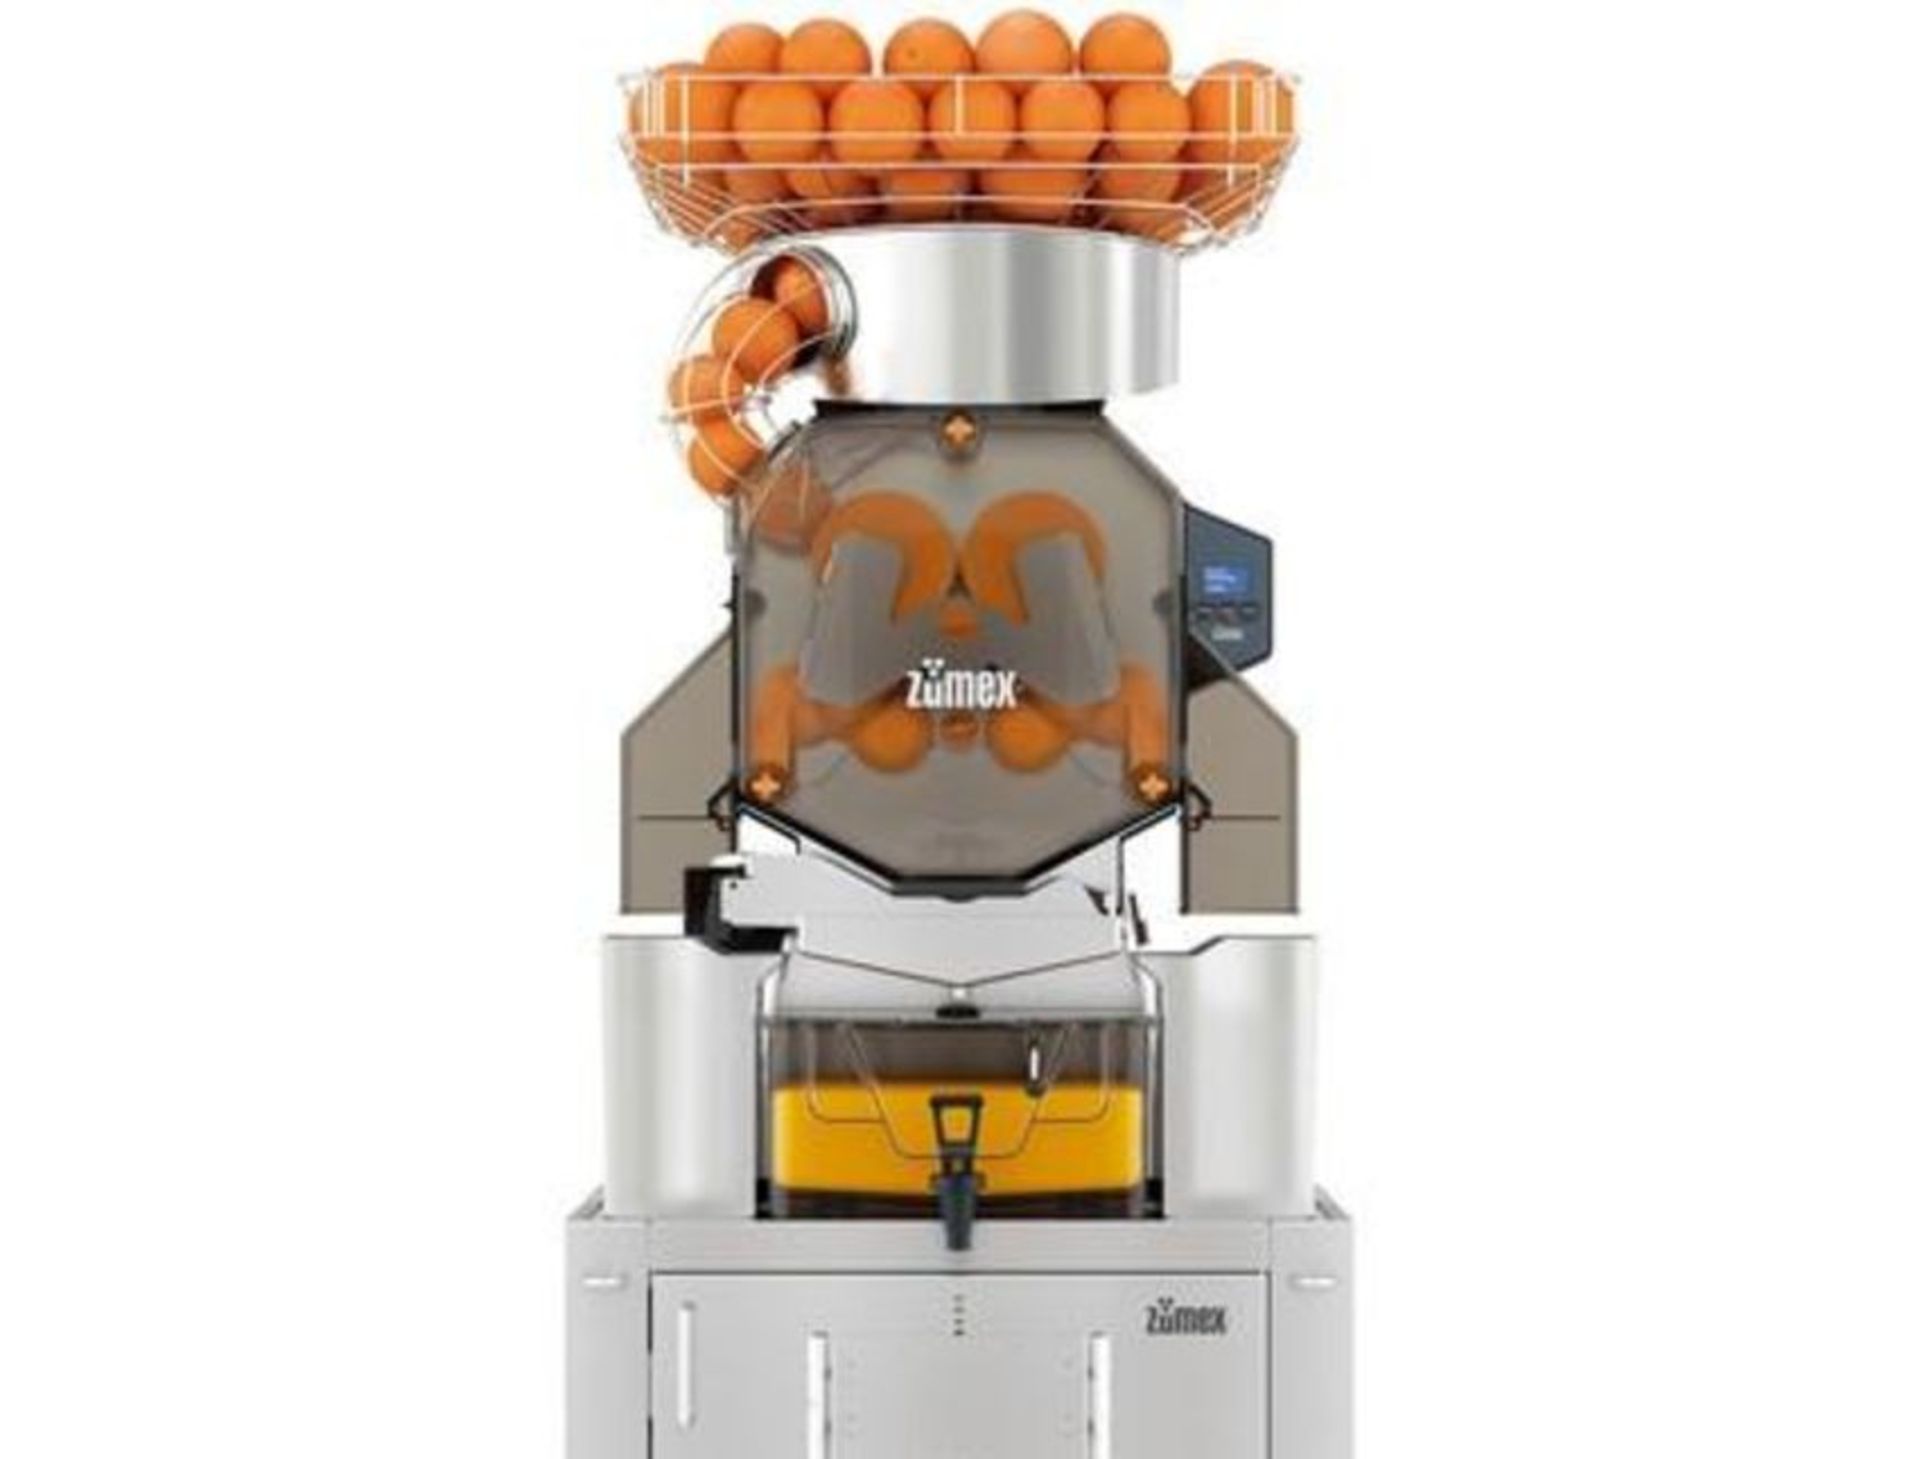 1 x Zumex Speed S +Plus Self-Service Podium Commercial Citrus Juicer - Manufactured in 2018 - Image 8 of 20